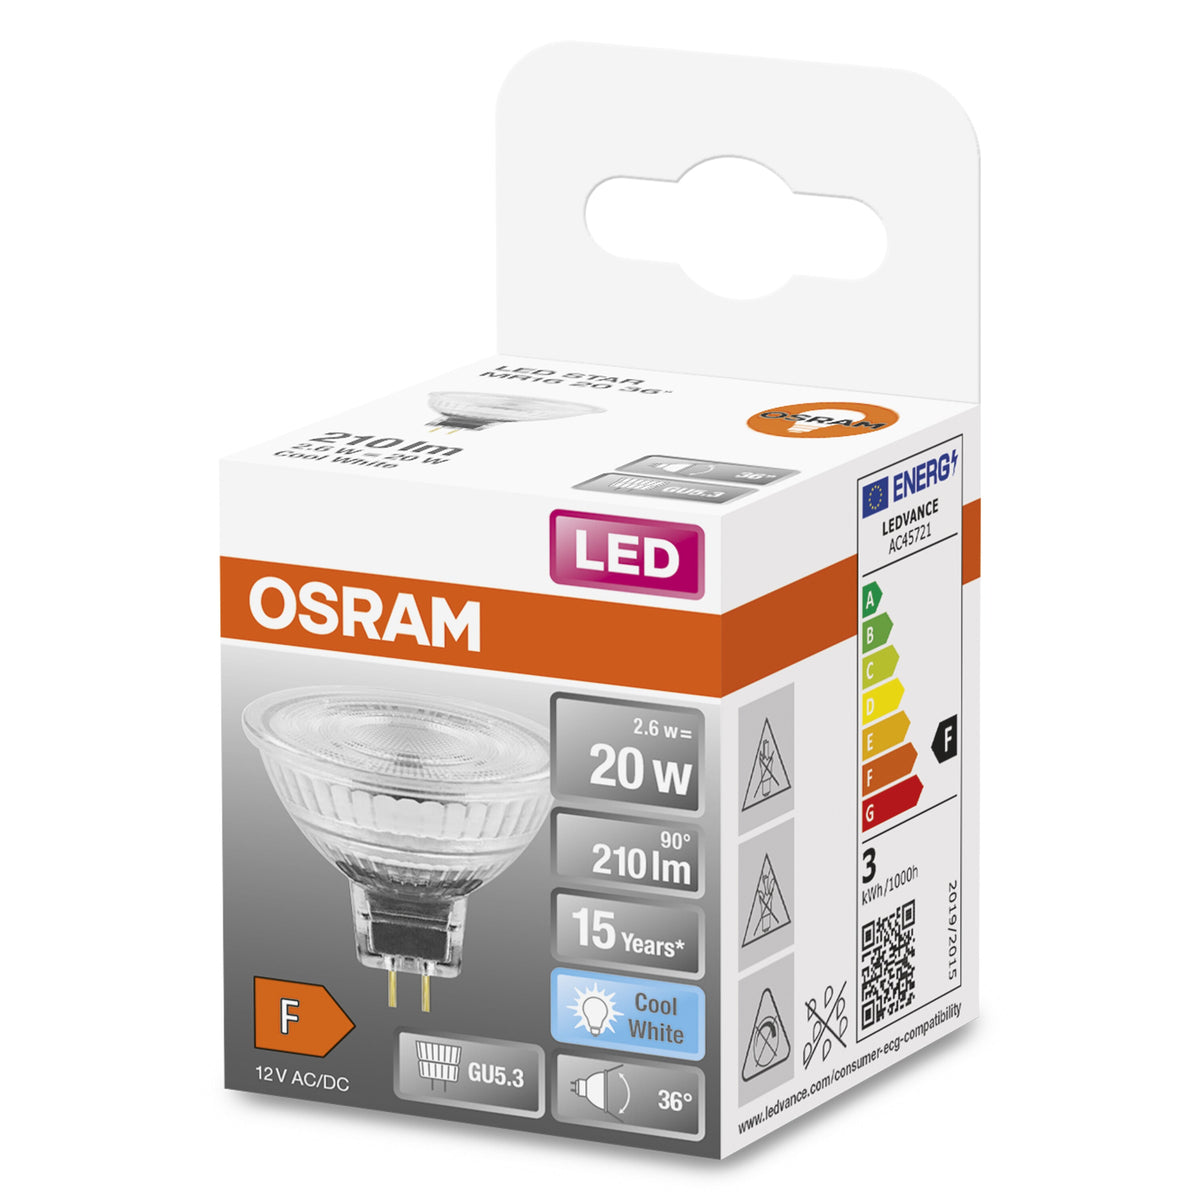 OSRAM MR16 LED Reflektorlampe mit GU5.3 Sockel, Kaltweiss (4000K), Glas Spot, 2.6W, Ersatz für 20W-Reflektorlampe, LED STAR MR16 12 V